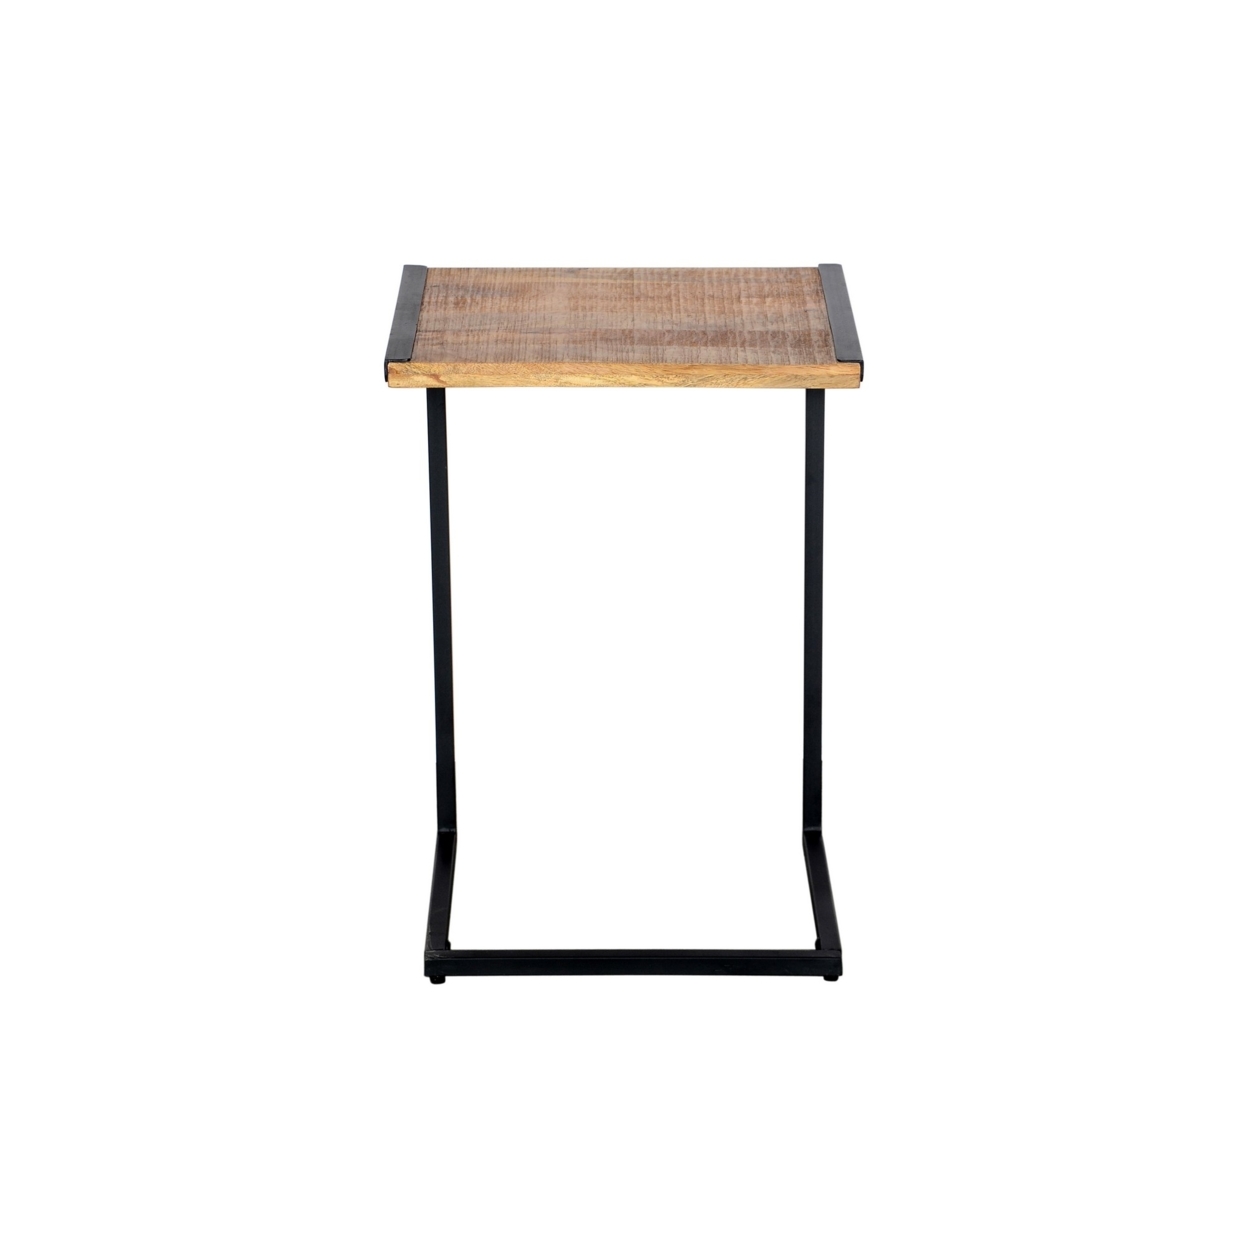 C Shape Mango Wood Sofa Side End Table With Metal Cantilever Base, Brown And Black- Saltoro Sherpi